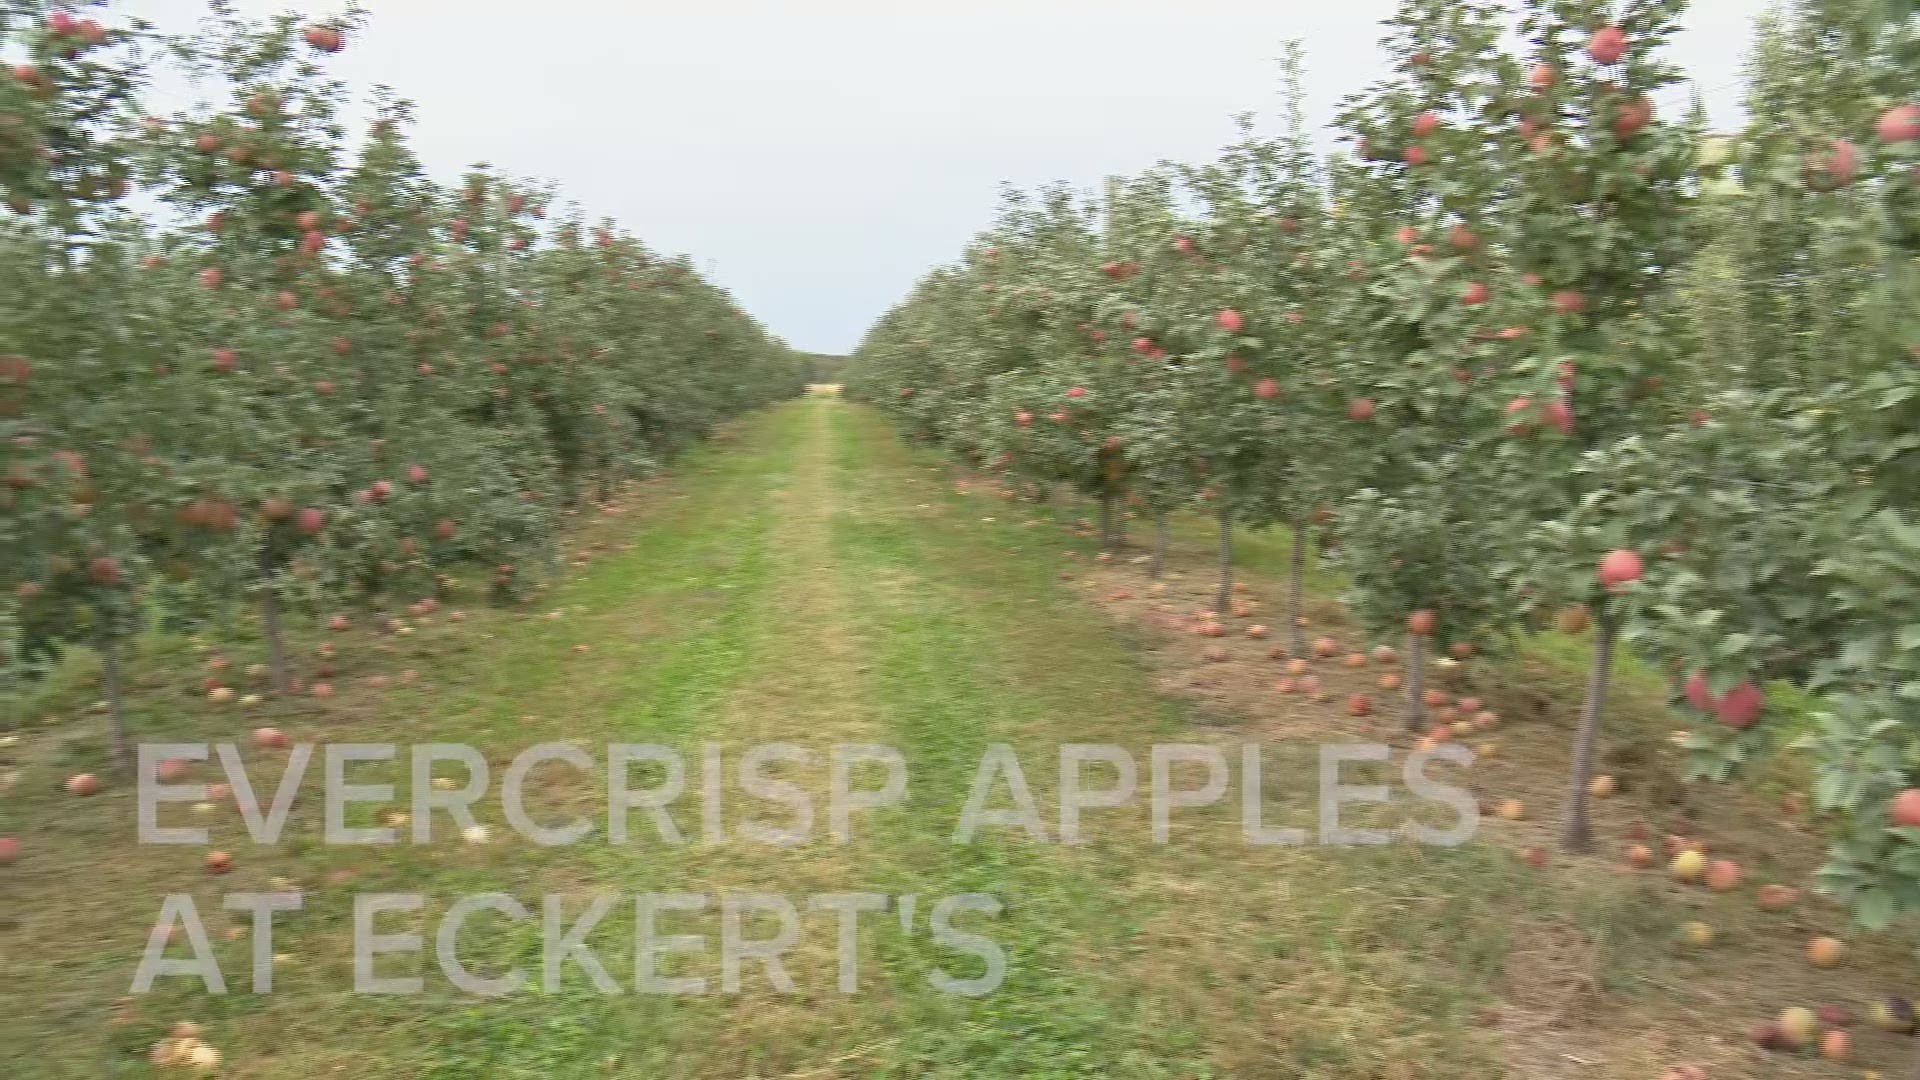 National Farmer&#39;s Day | EverCrisp apples at Eckert&#39;s this weekend | www.semadata.org